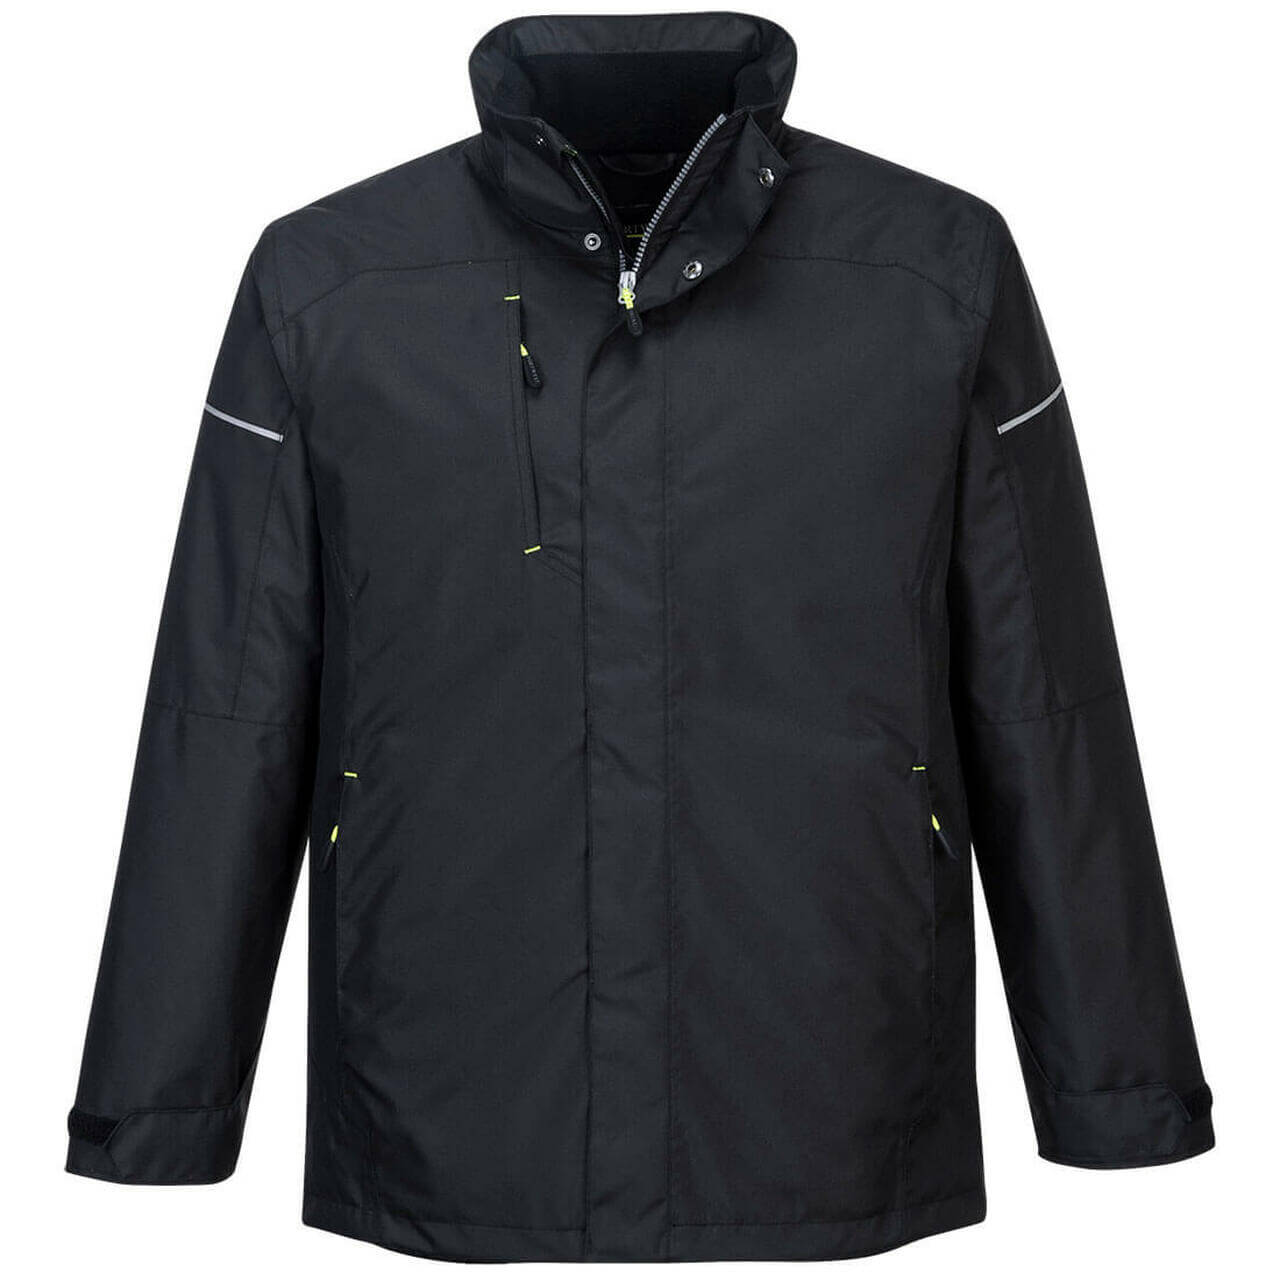 Jacket with Heat Reflective Lining, Black